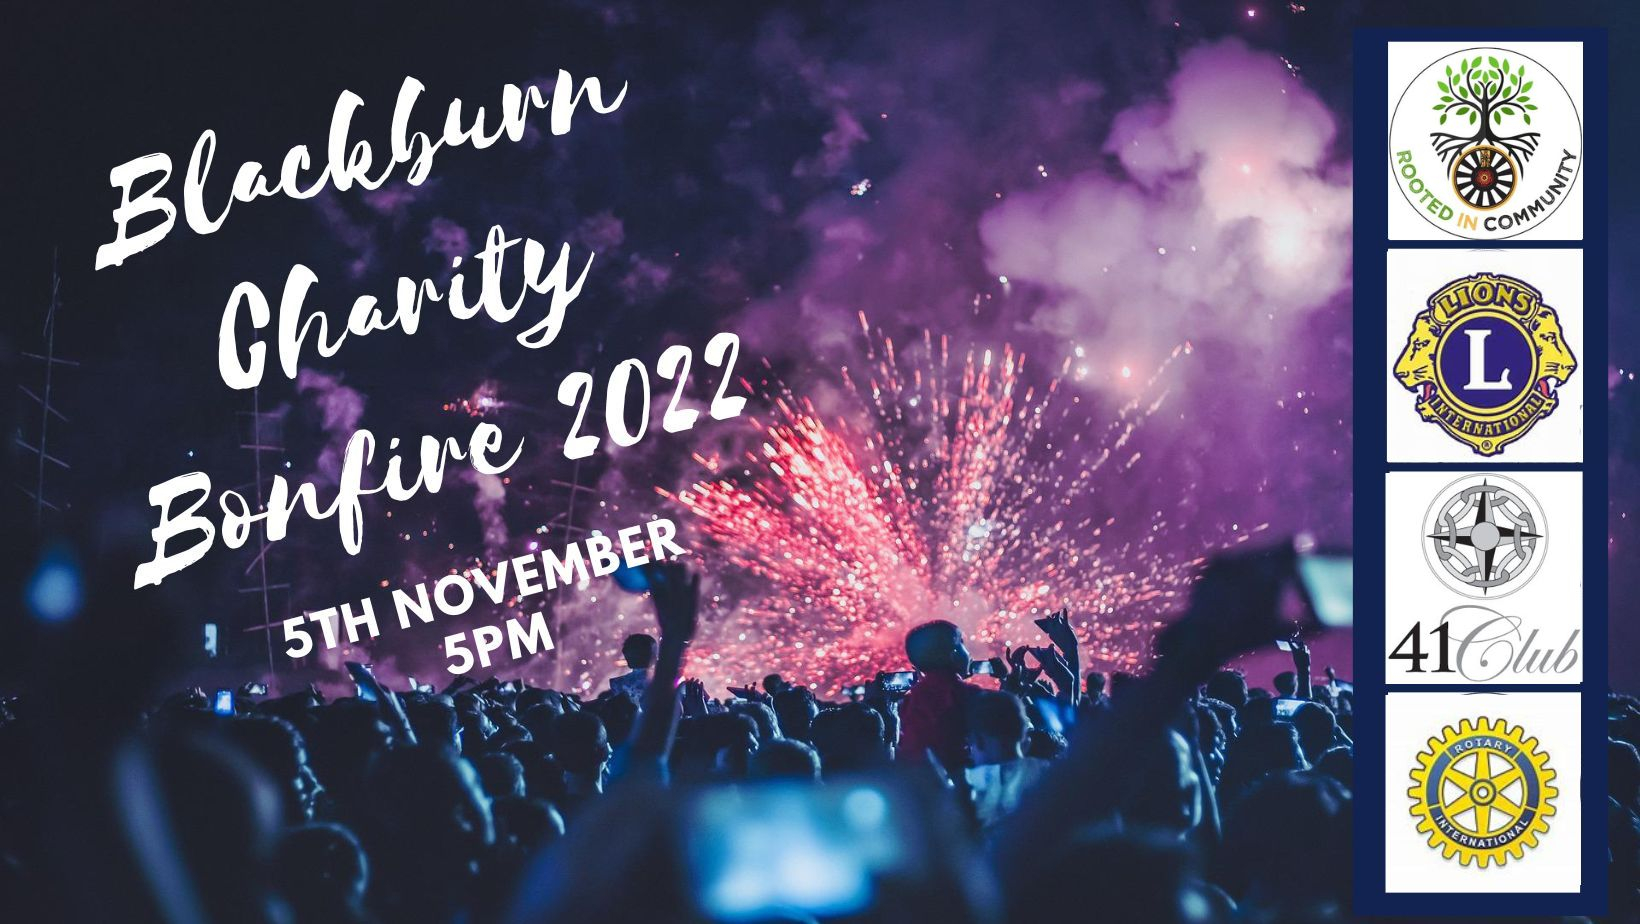 Blackburn Charity Bonfire Event 2022